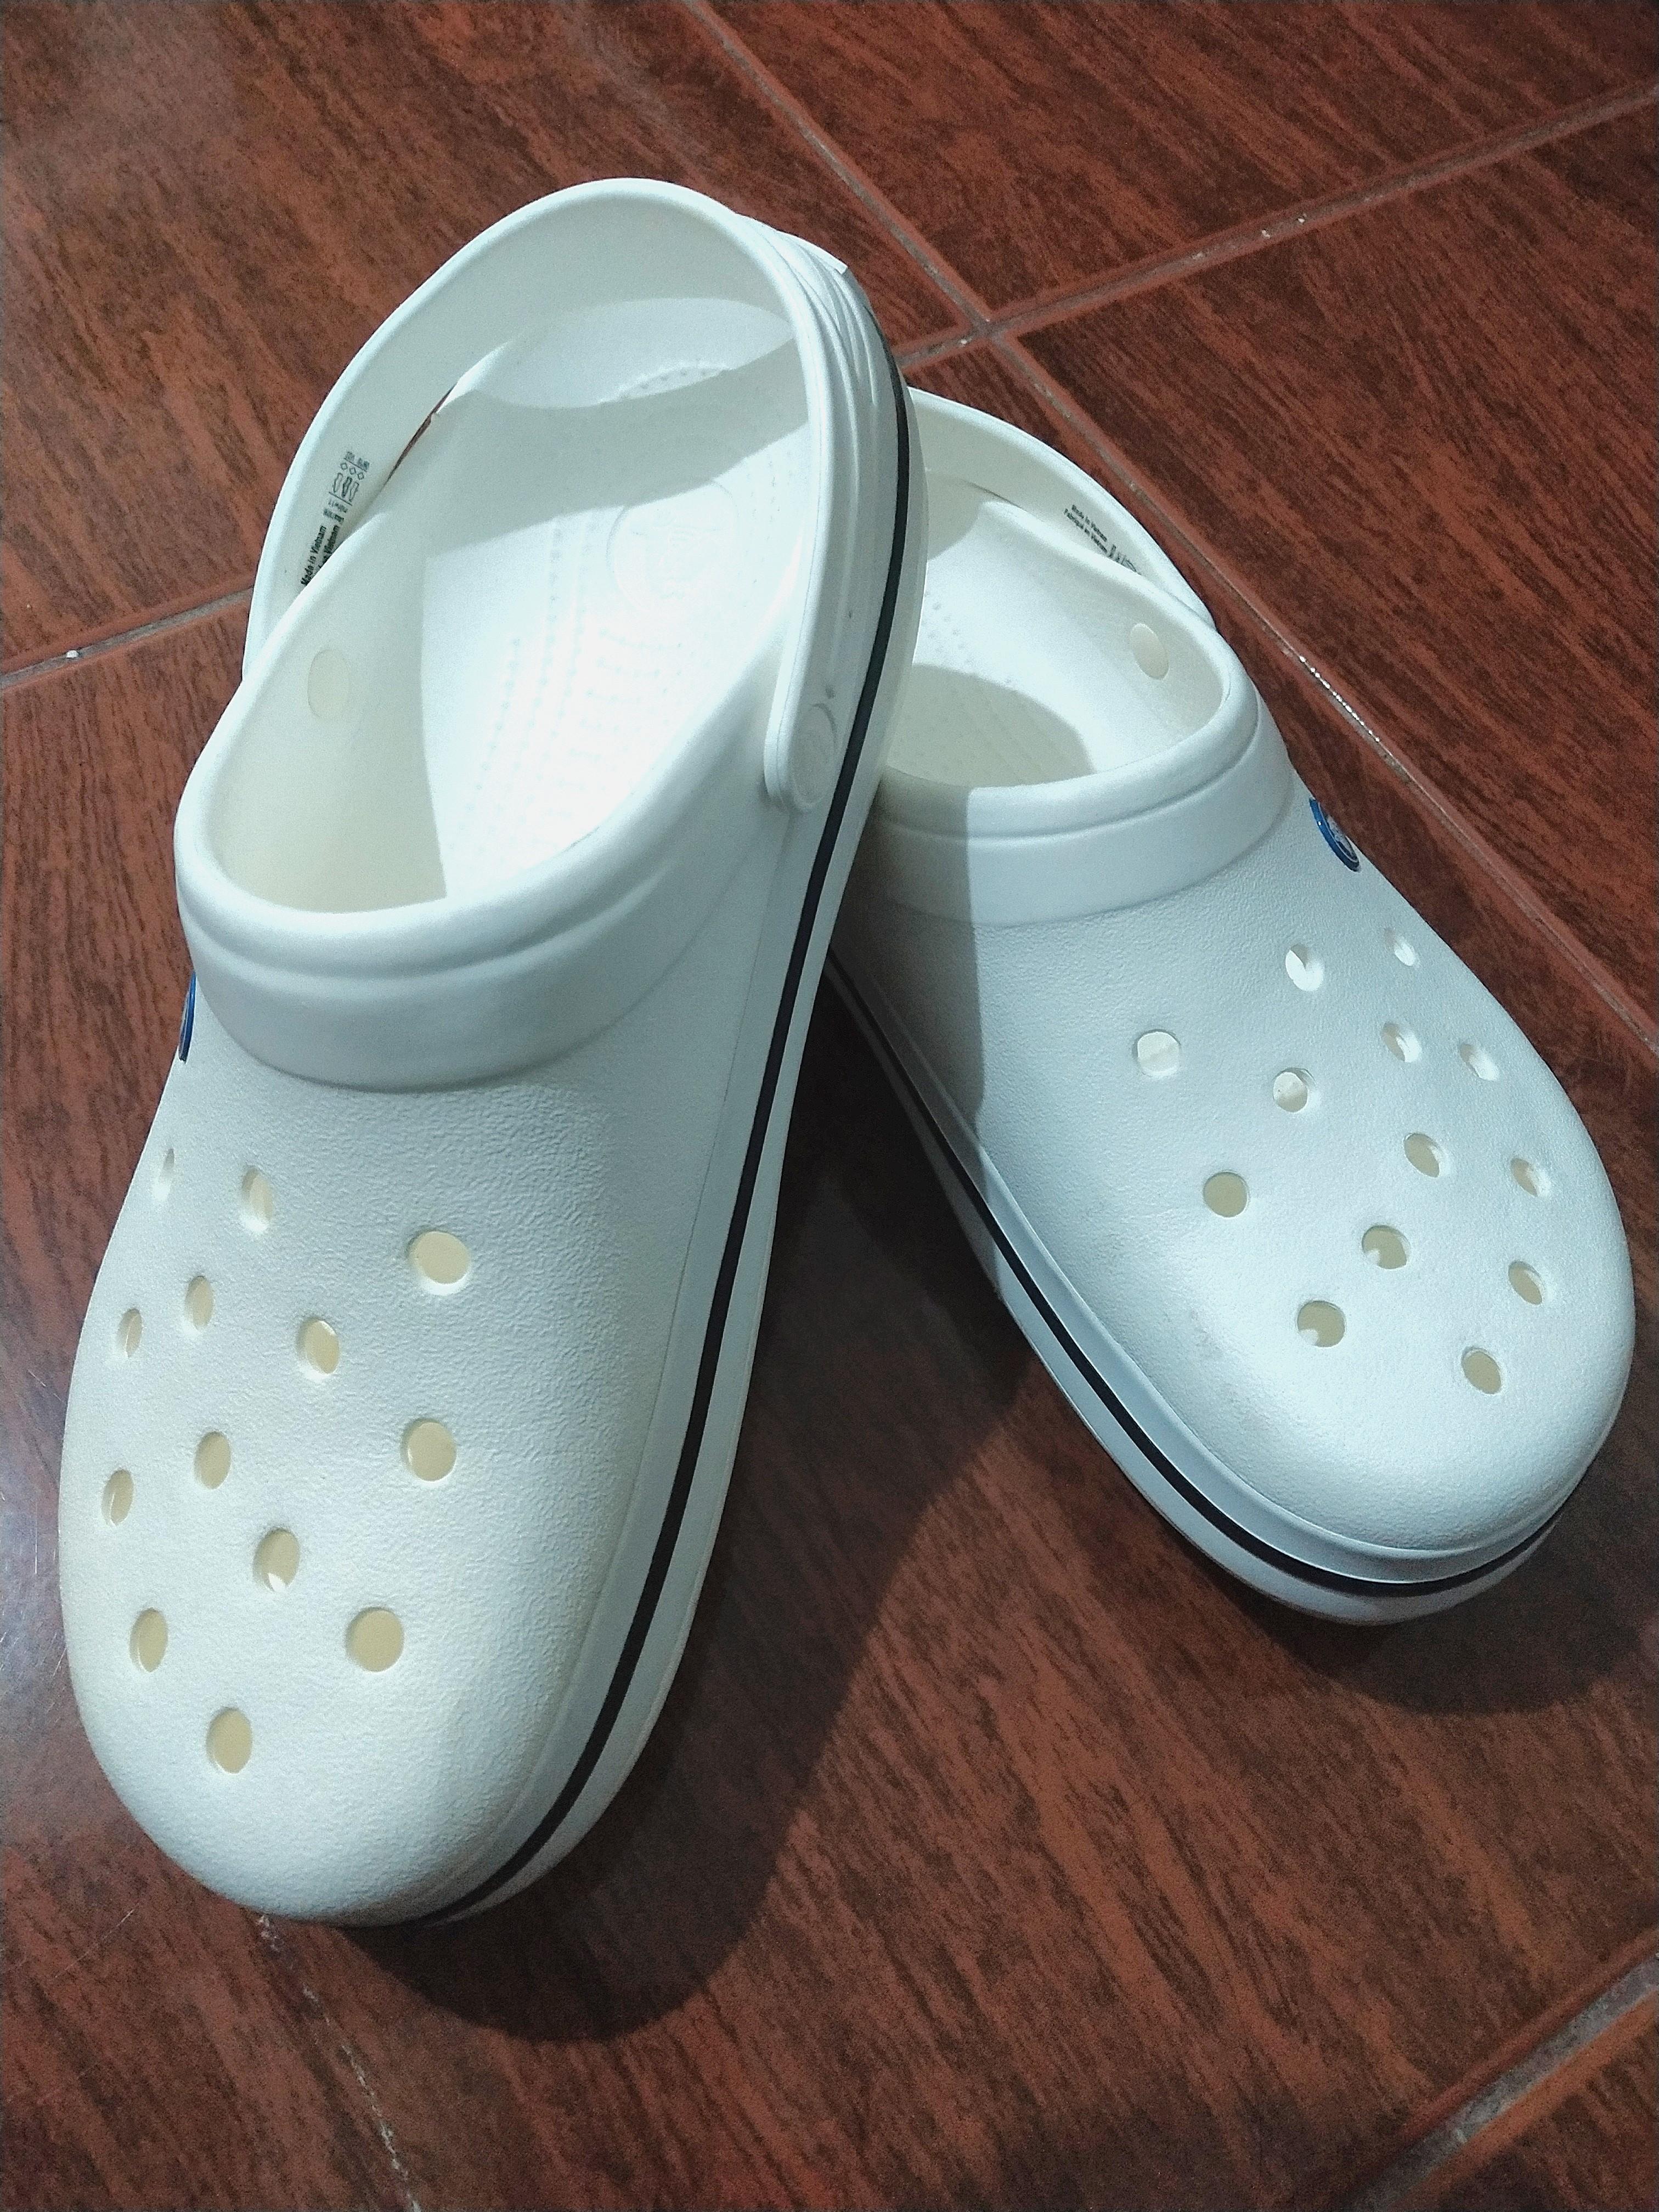 crocs 9 11 size